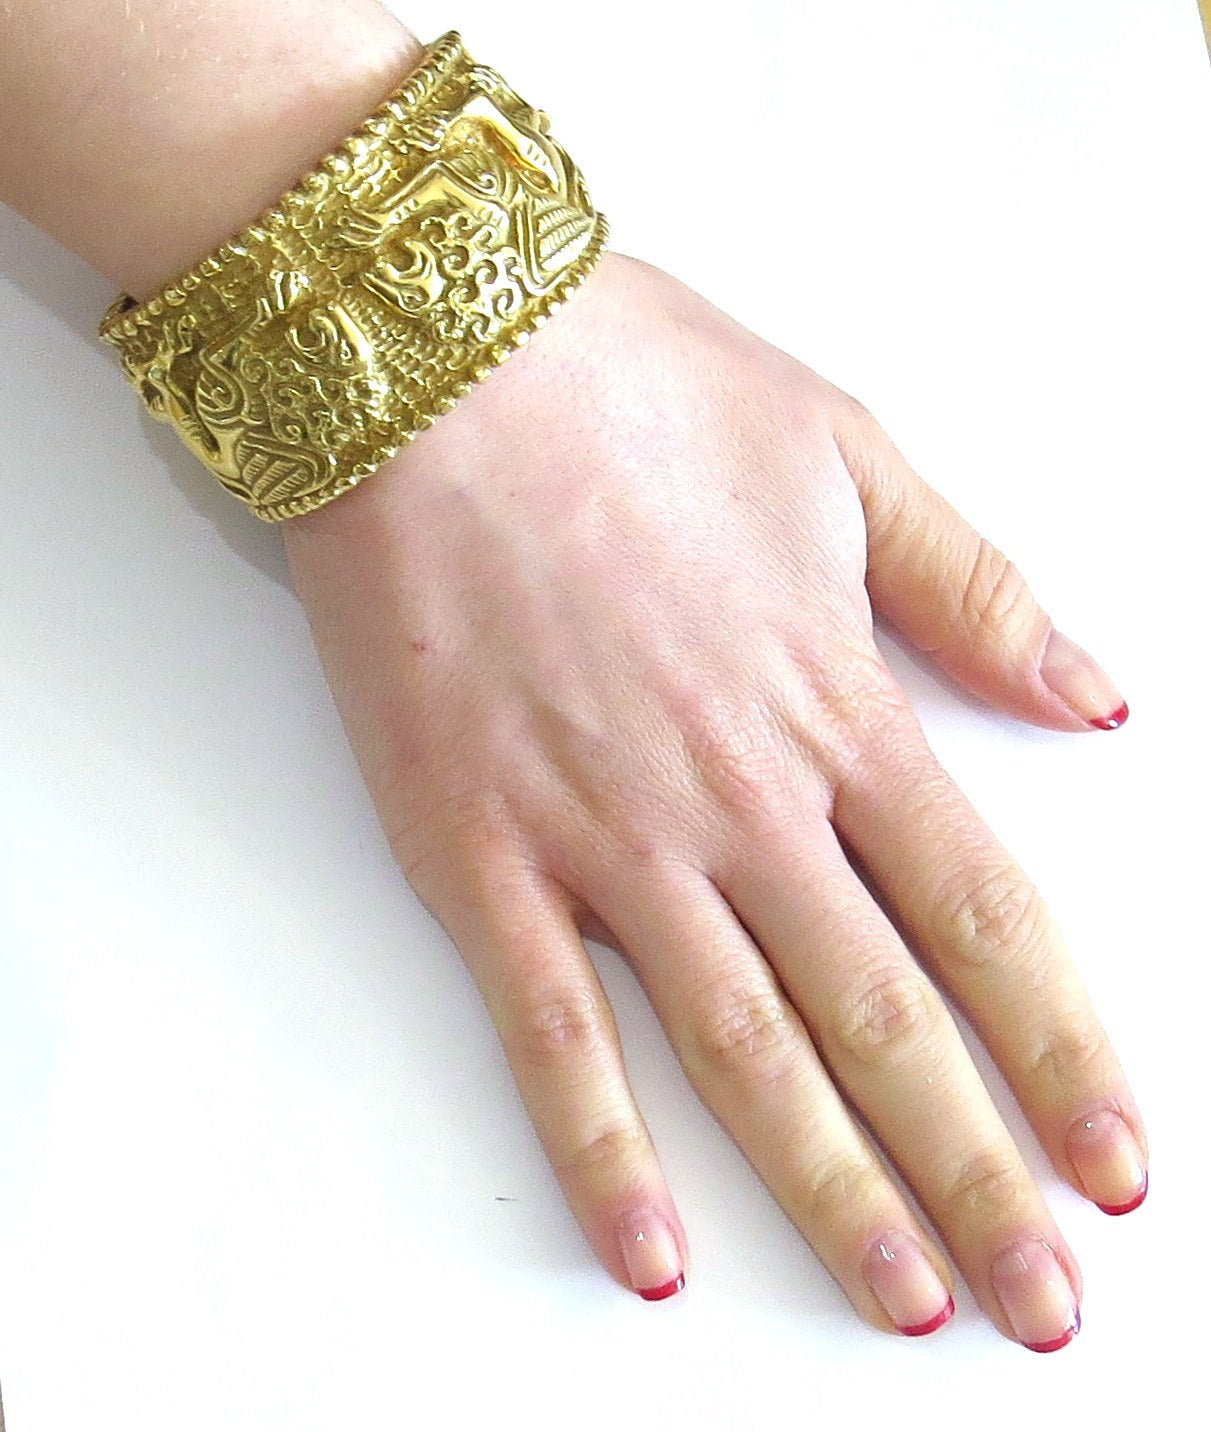 Modern Impressive Gold Lion Bracelet by Robert Wander for Winc